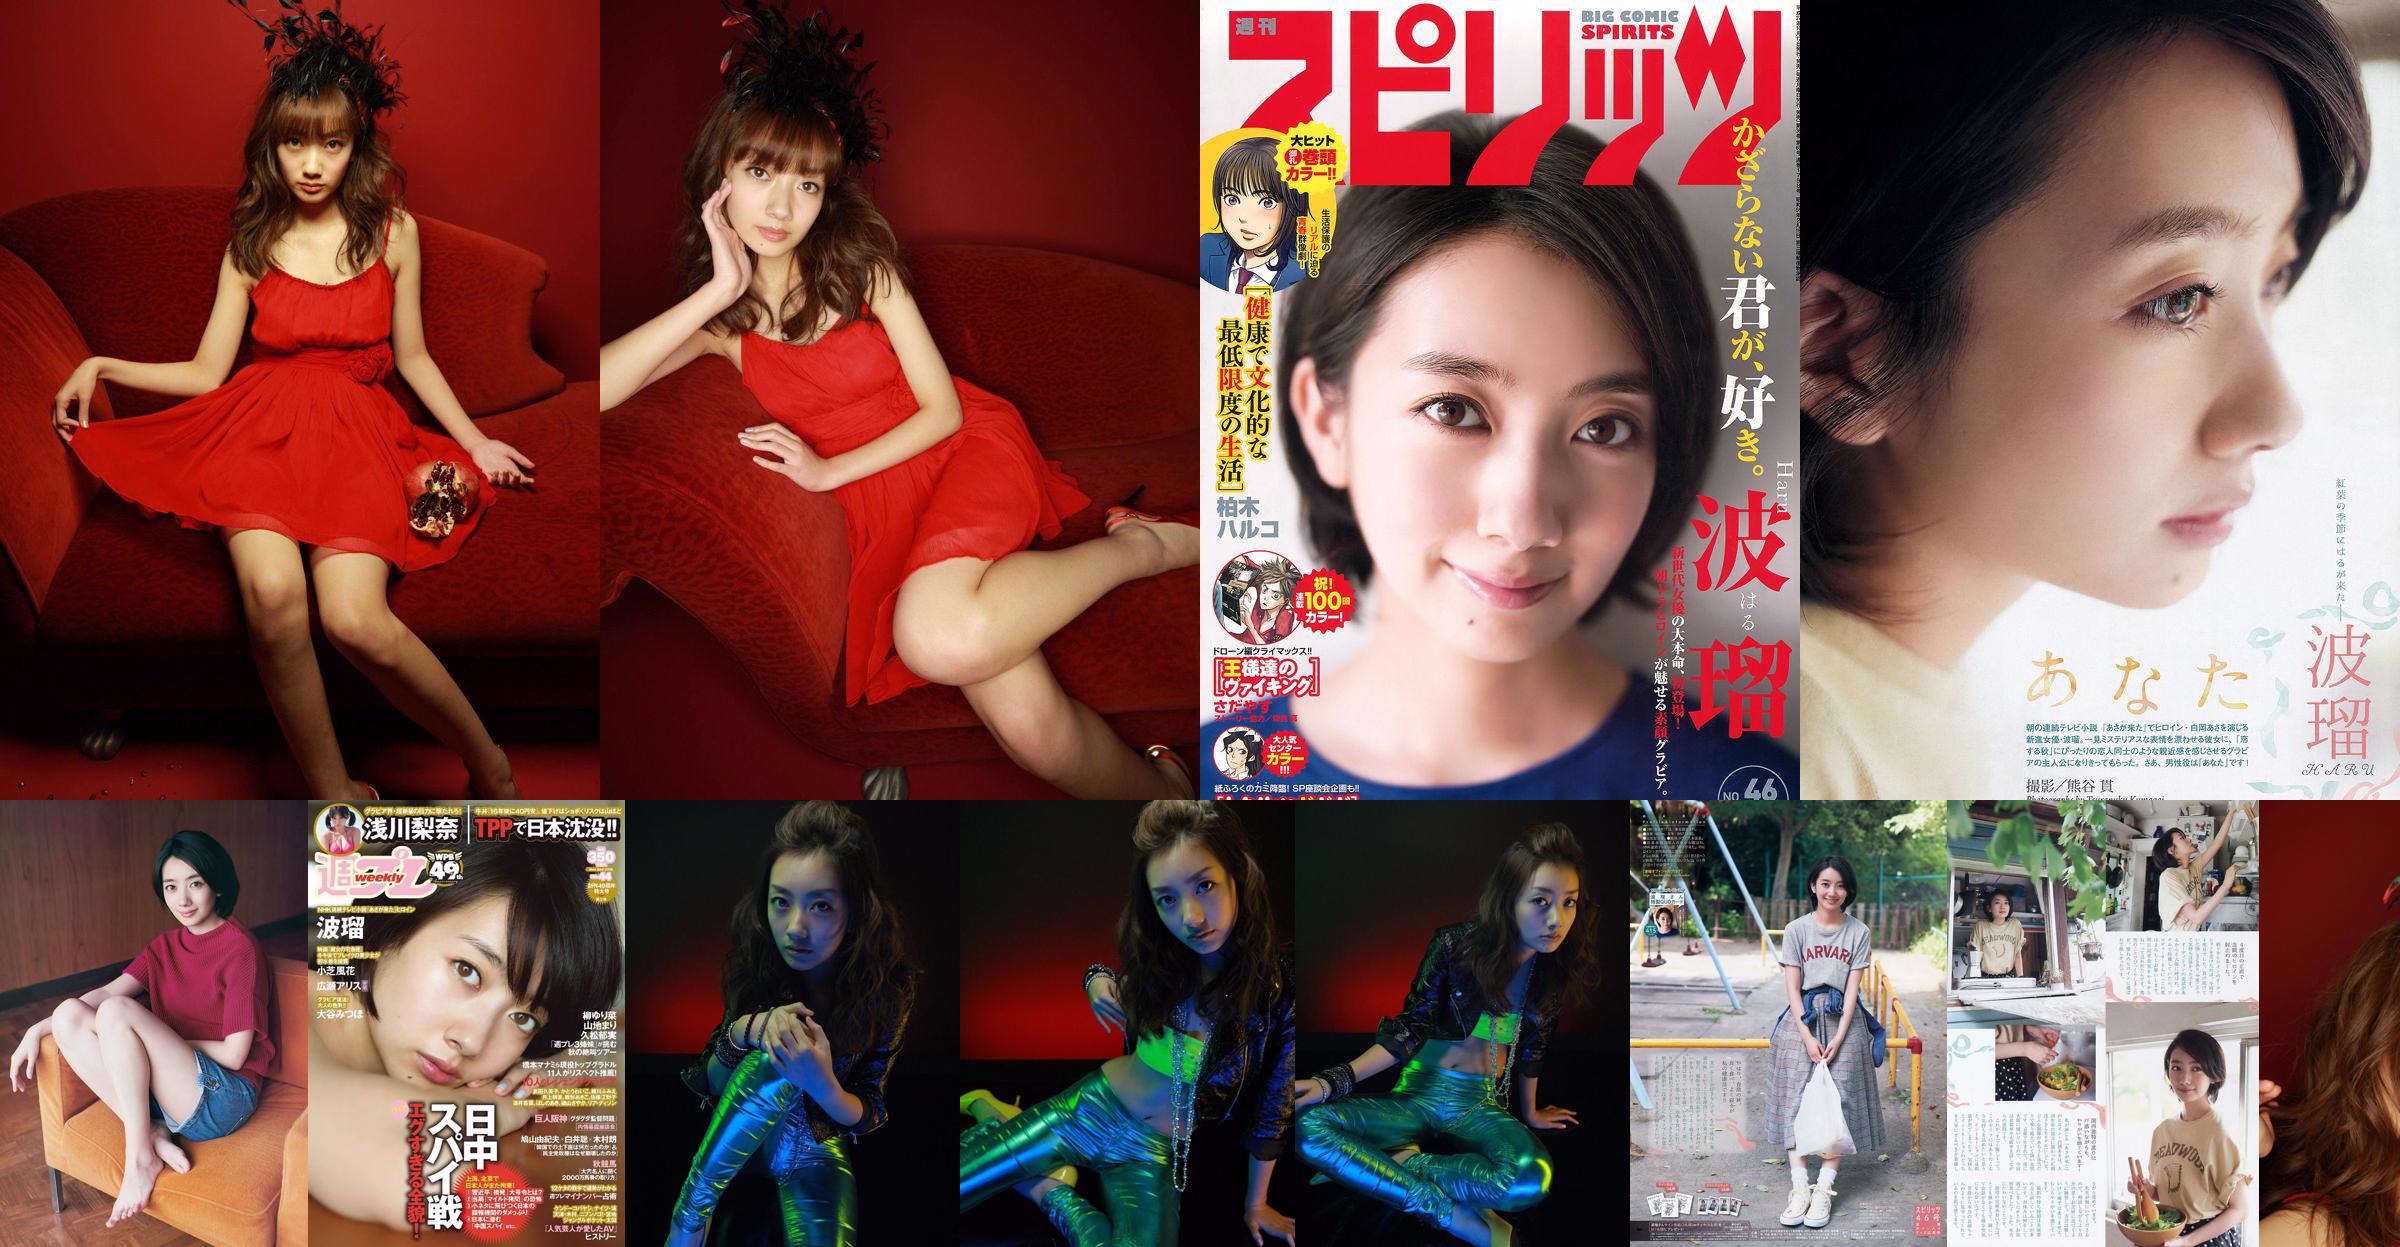 Haru, Asakawa Rina, Xiaozhi Fenghua, 広瀬アリス, Otani みつほ [Weekly Playboy] 2015 No.44 Photo Magazine No.5851c9 Page 1